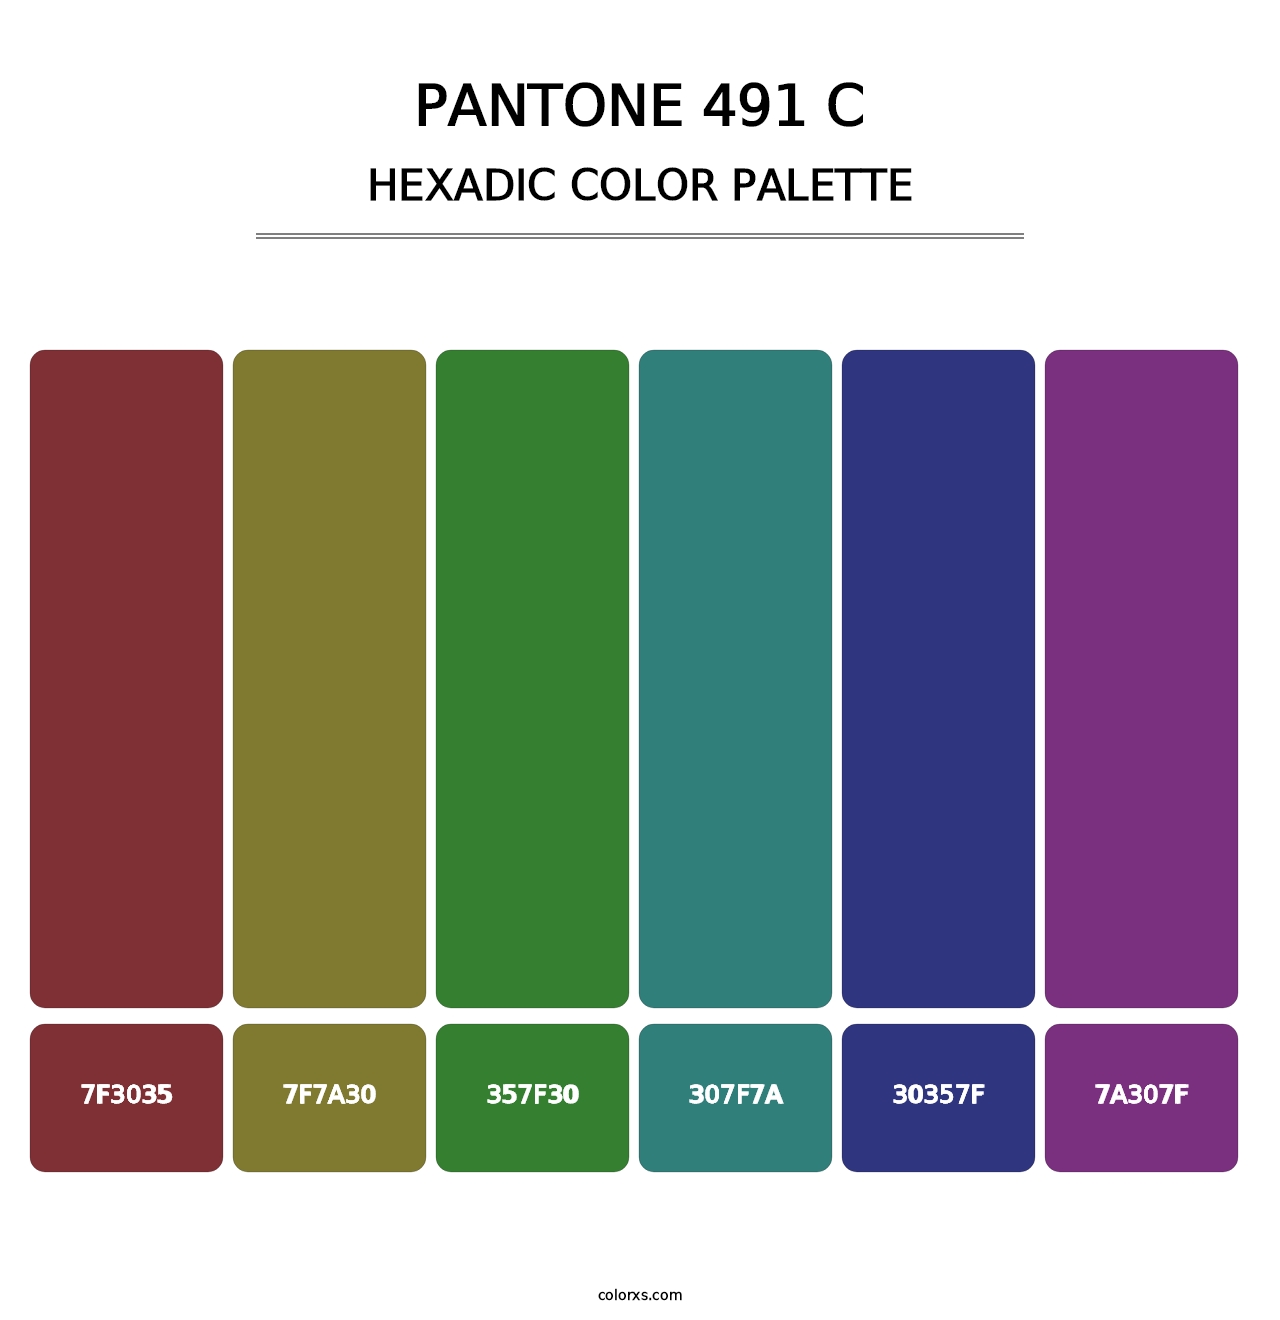 PANTONE 491 C - Hexadic Color Palette